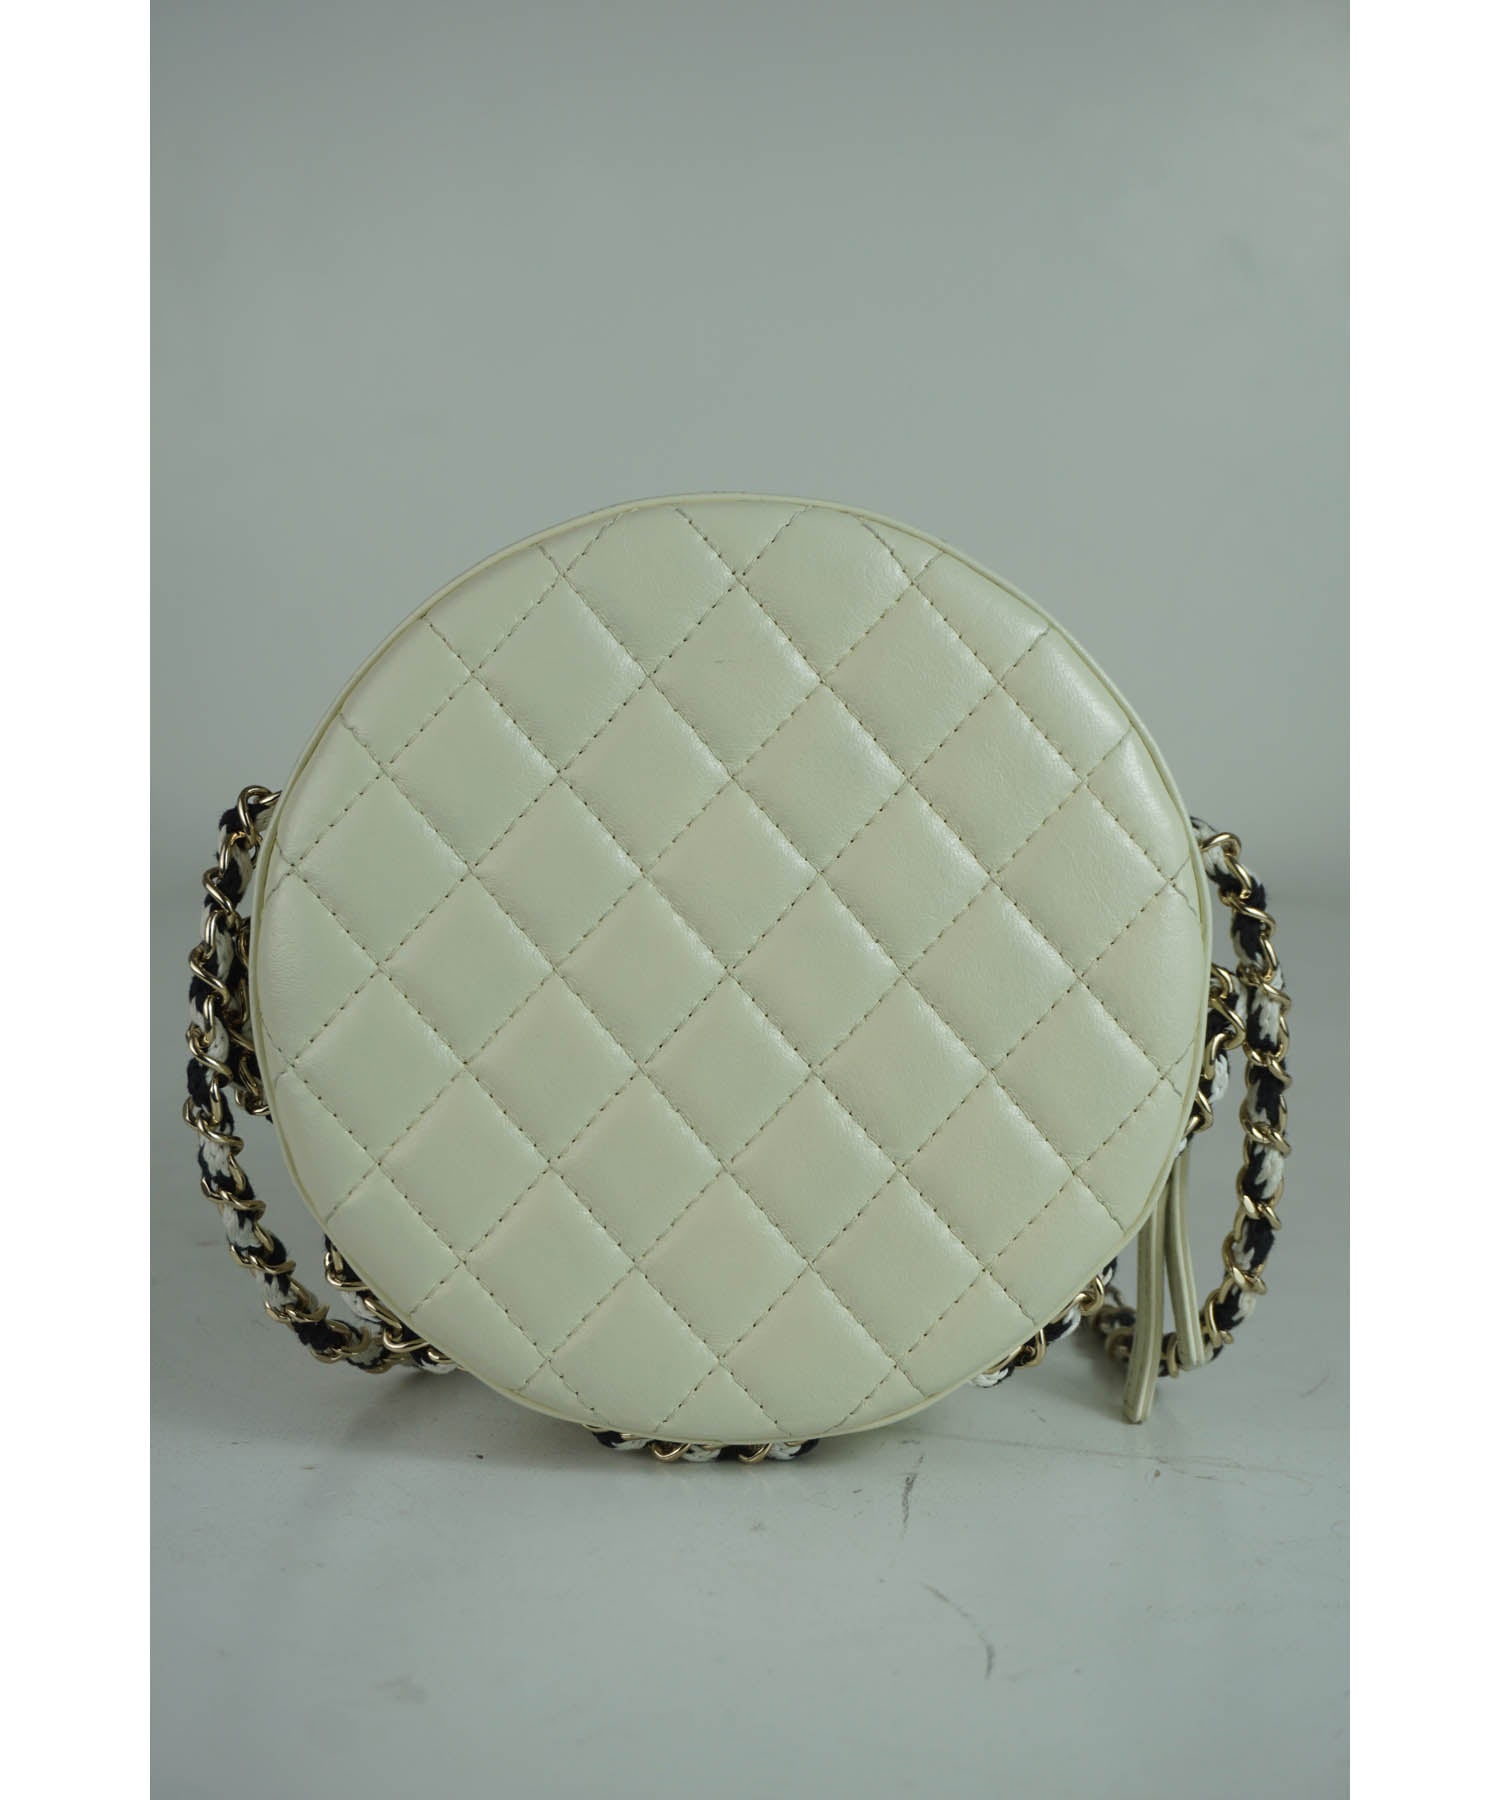 Chanel Limited Edition La Pausa Shoulder Bag